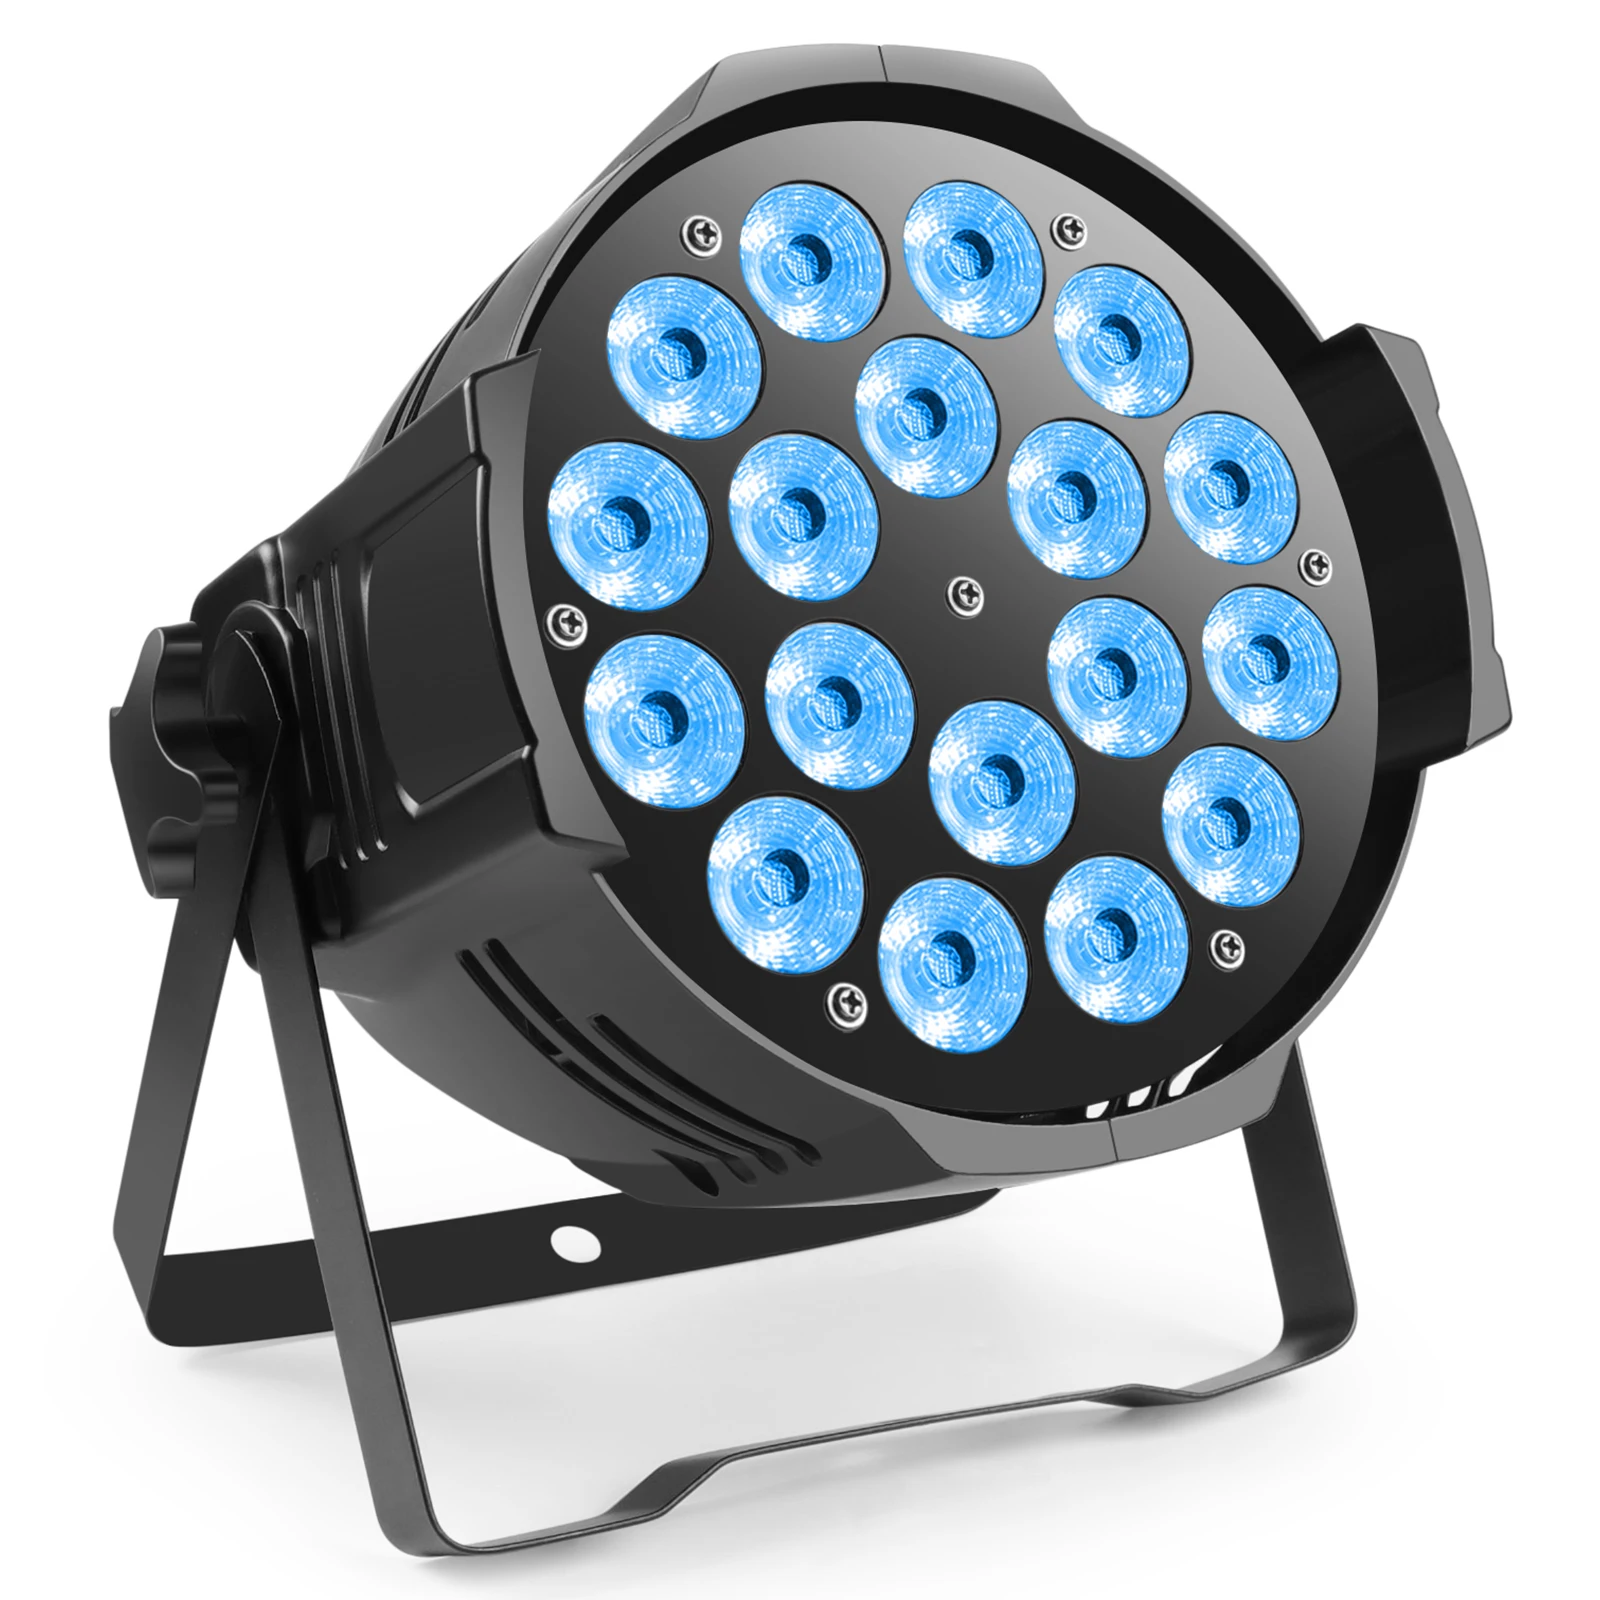 

U`King 18x10W Aluminum Shell LED Wash Light Uplight RGBW Disco Lighting LED Par Can Stage Lights